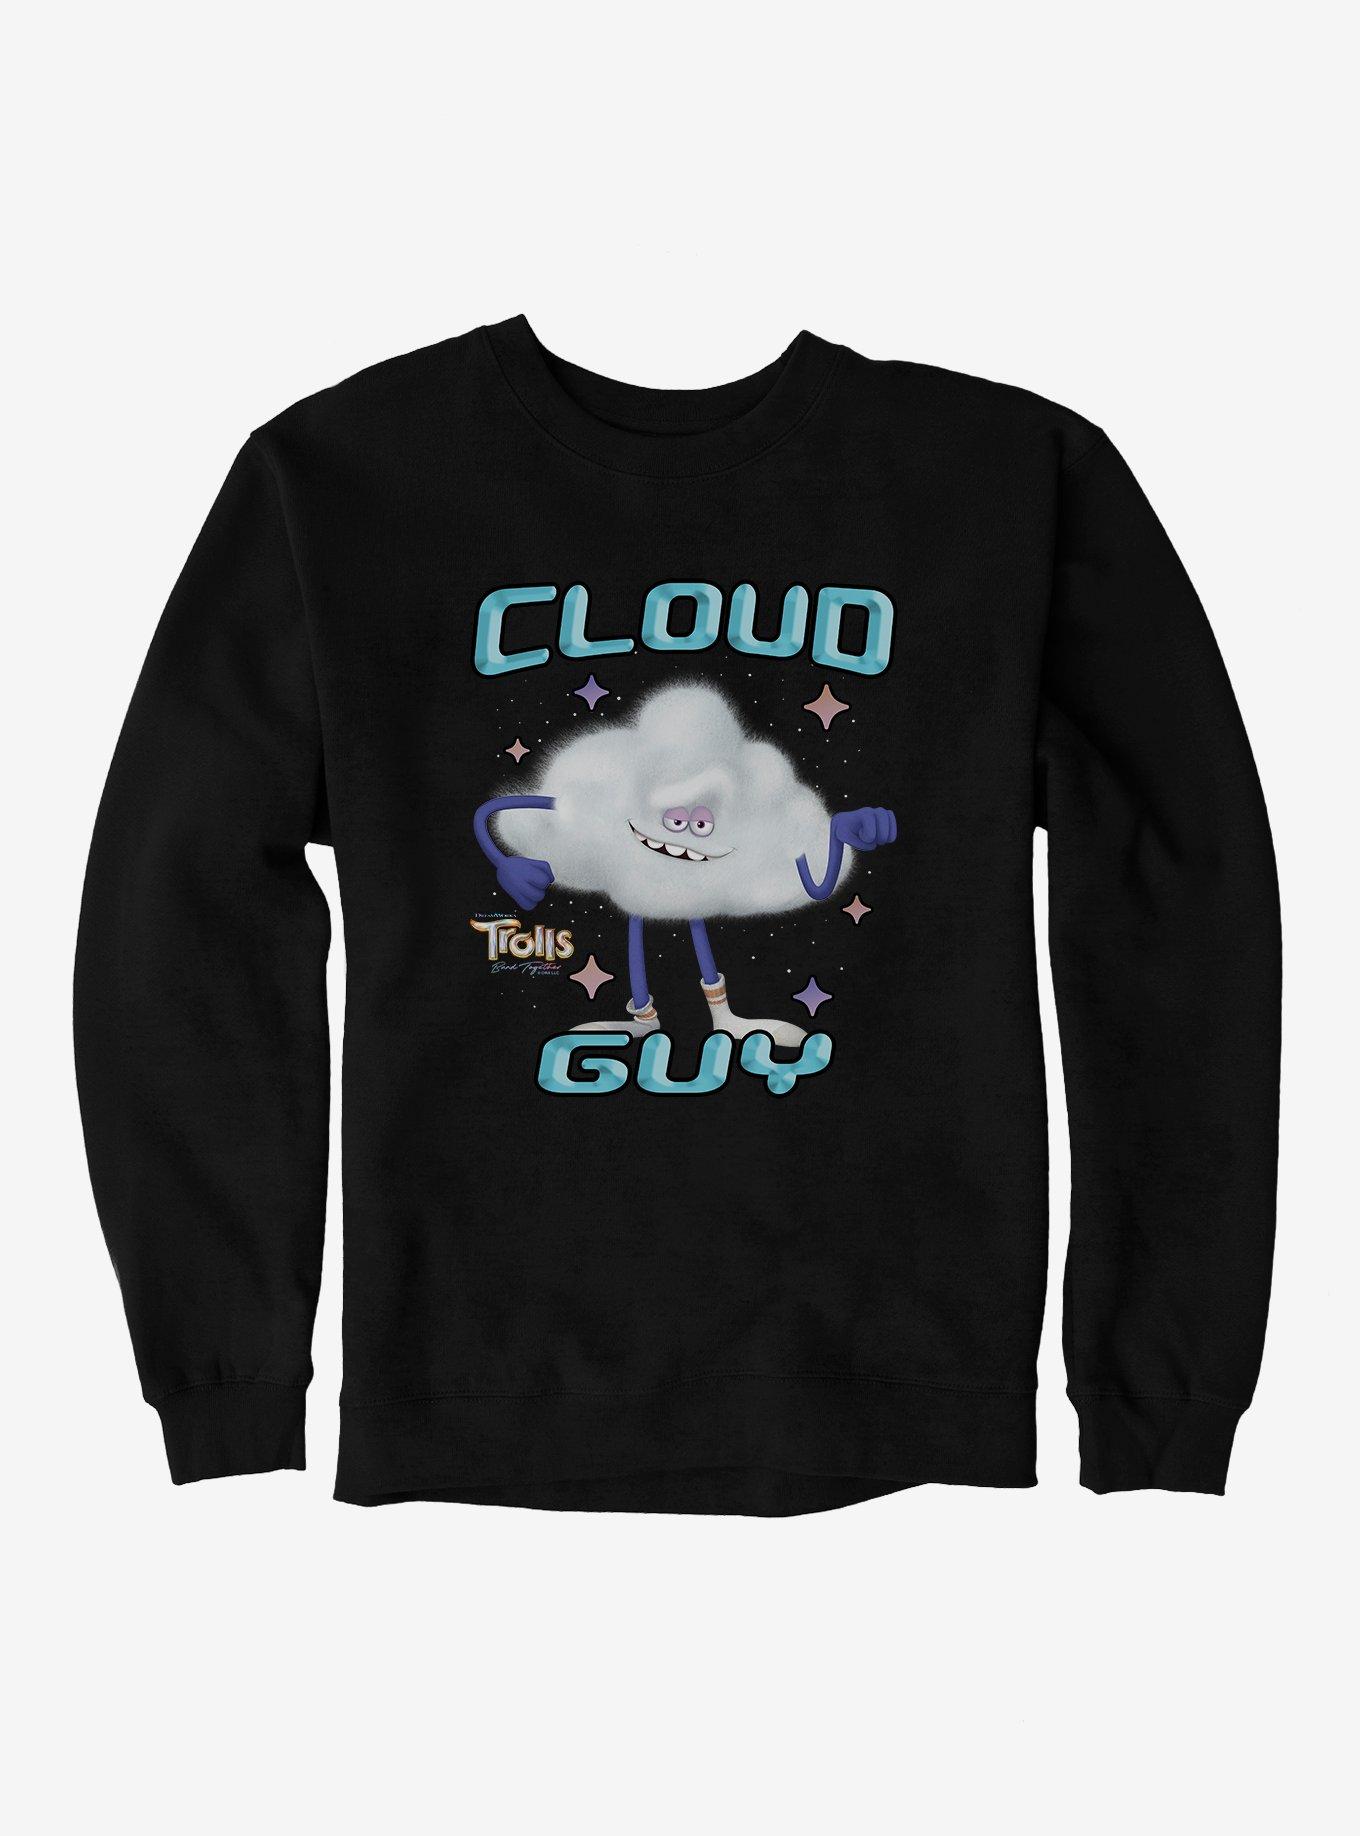 Trolls 3 Band Together Cloud Guy Sweatshirt, BLACK, hi-res